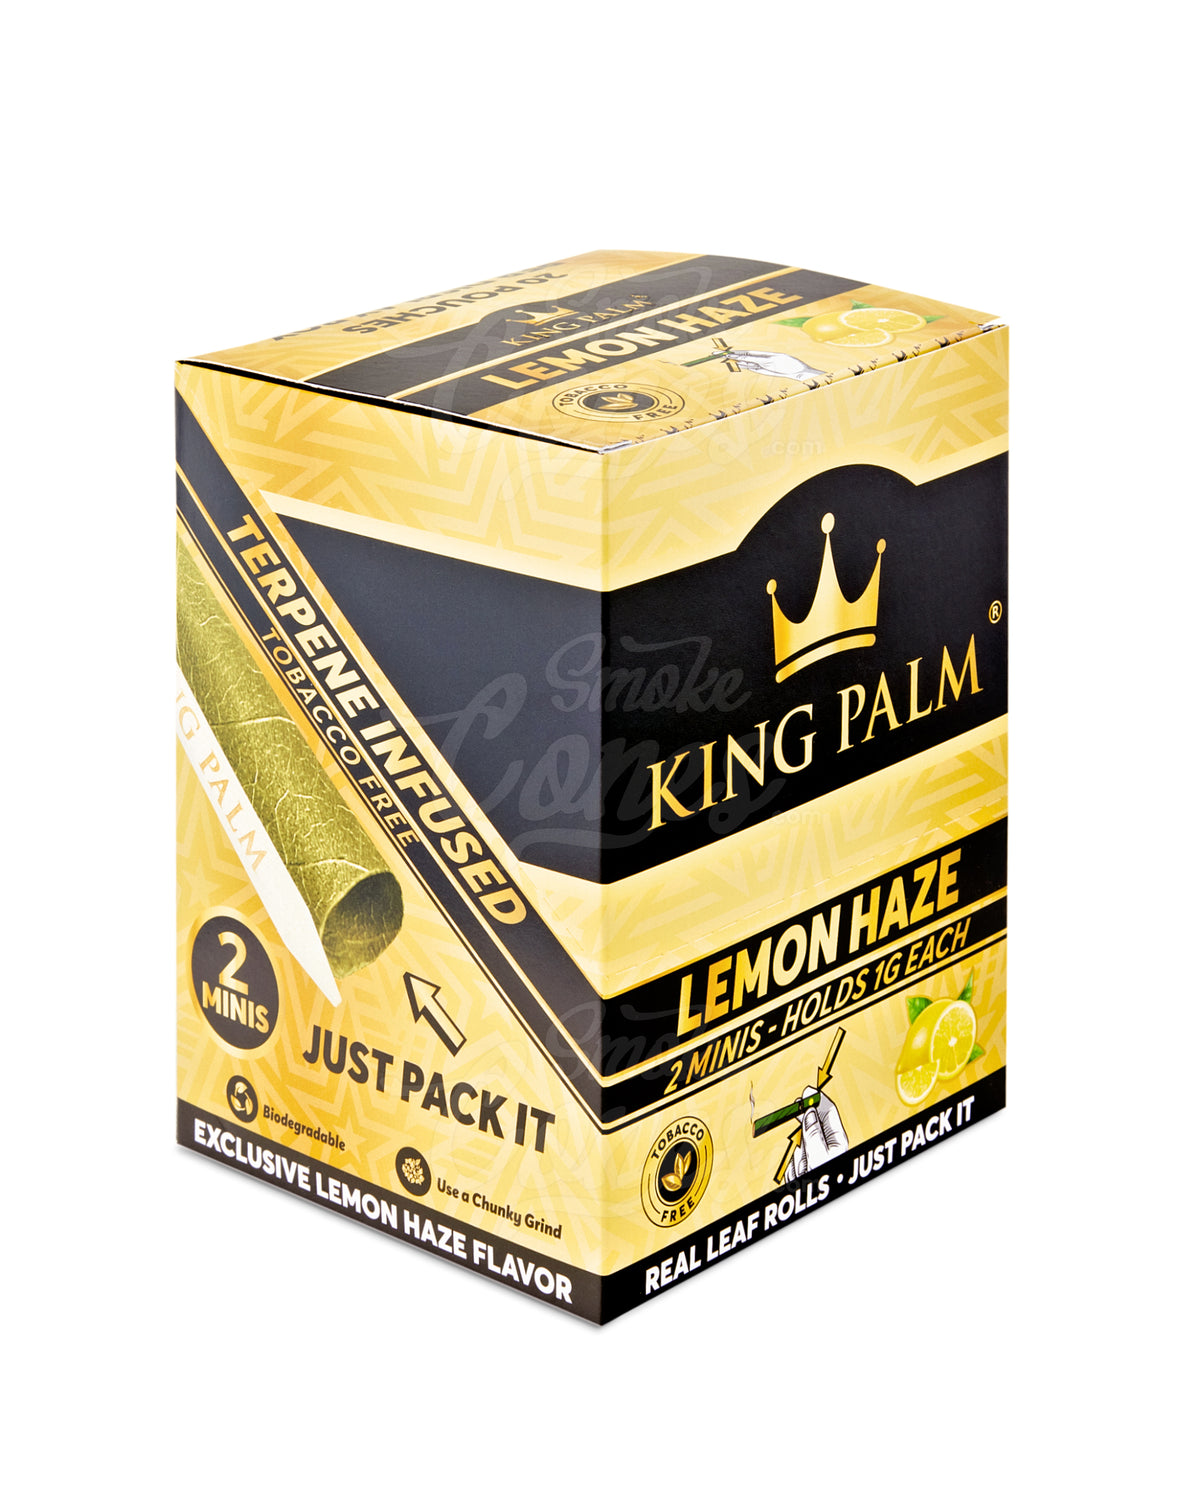 King Palm Lemon Haze Natural Mini Leaf Blunt Wraps 20/Box - 2